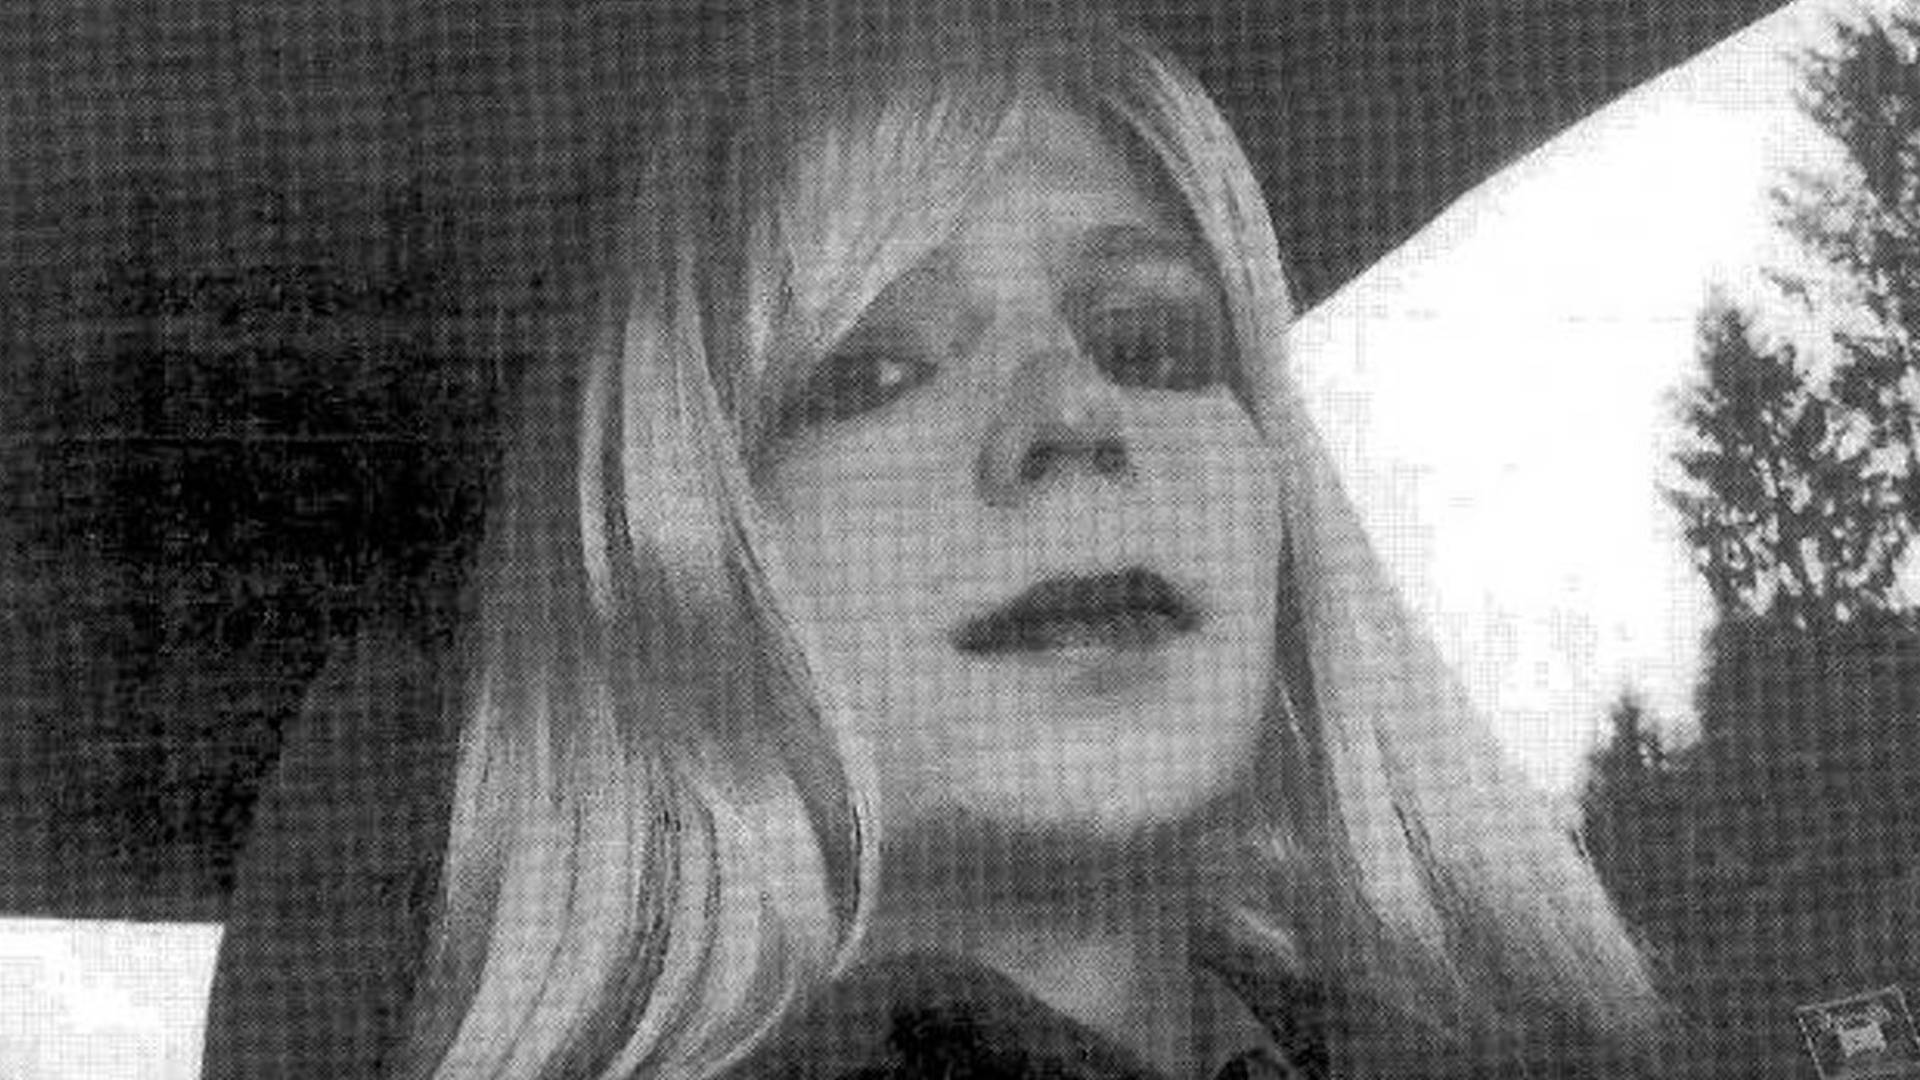 Chelsea Manning Democracy Now!